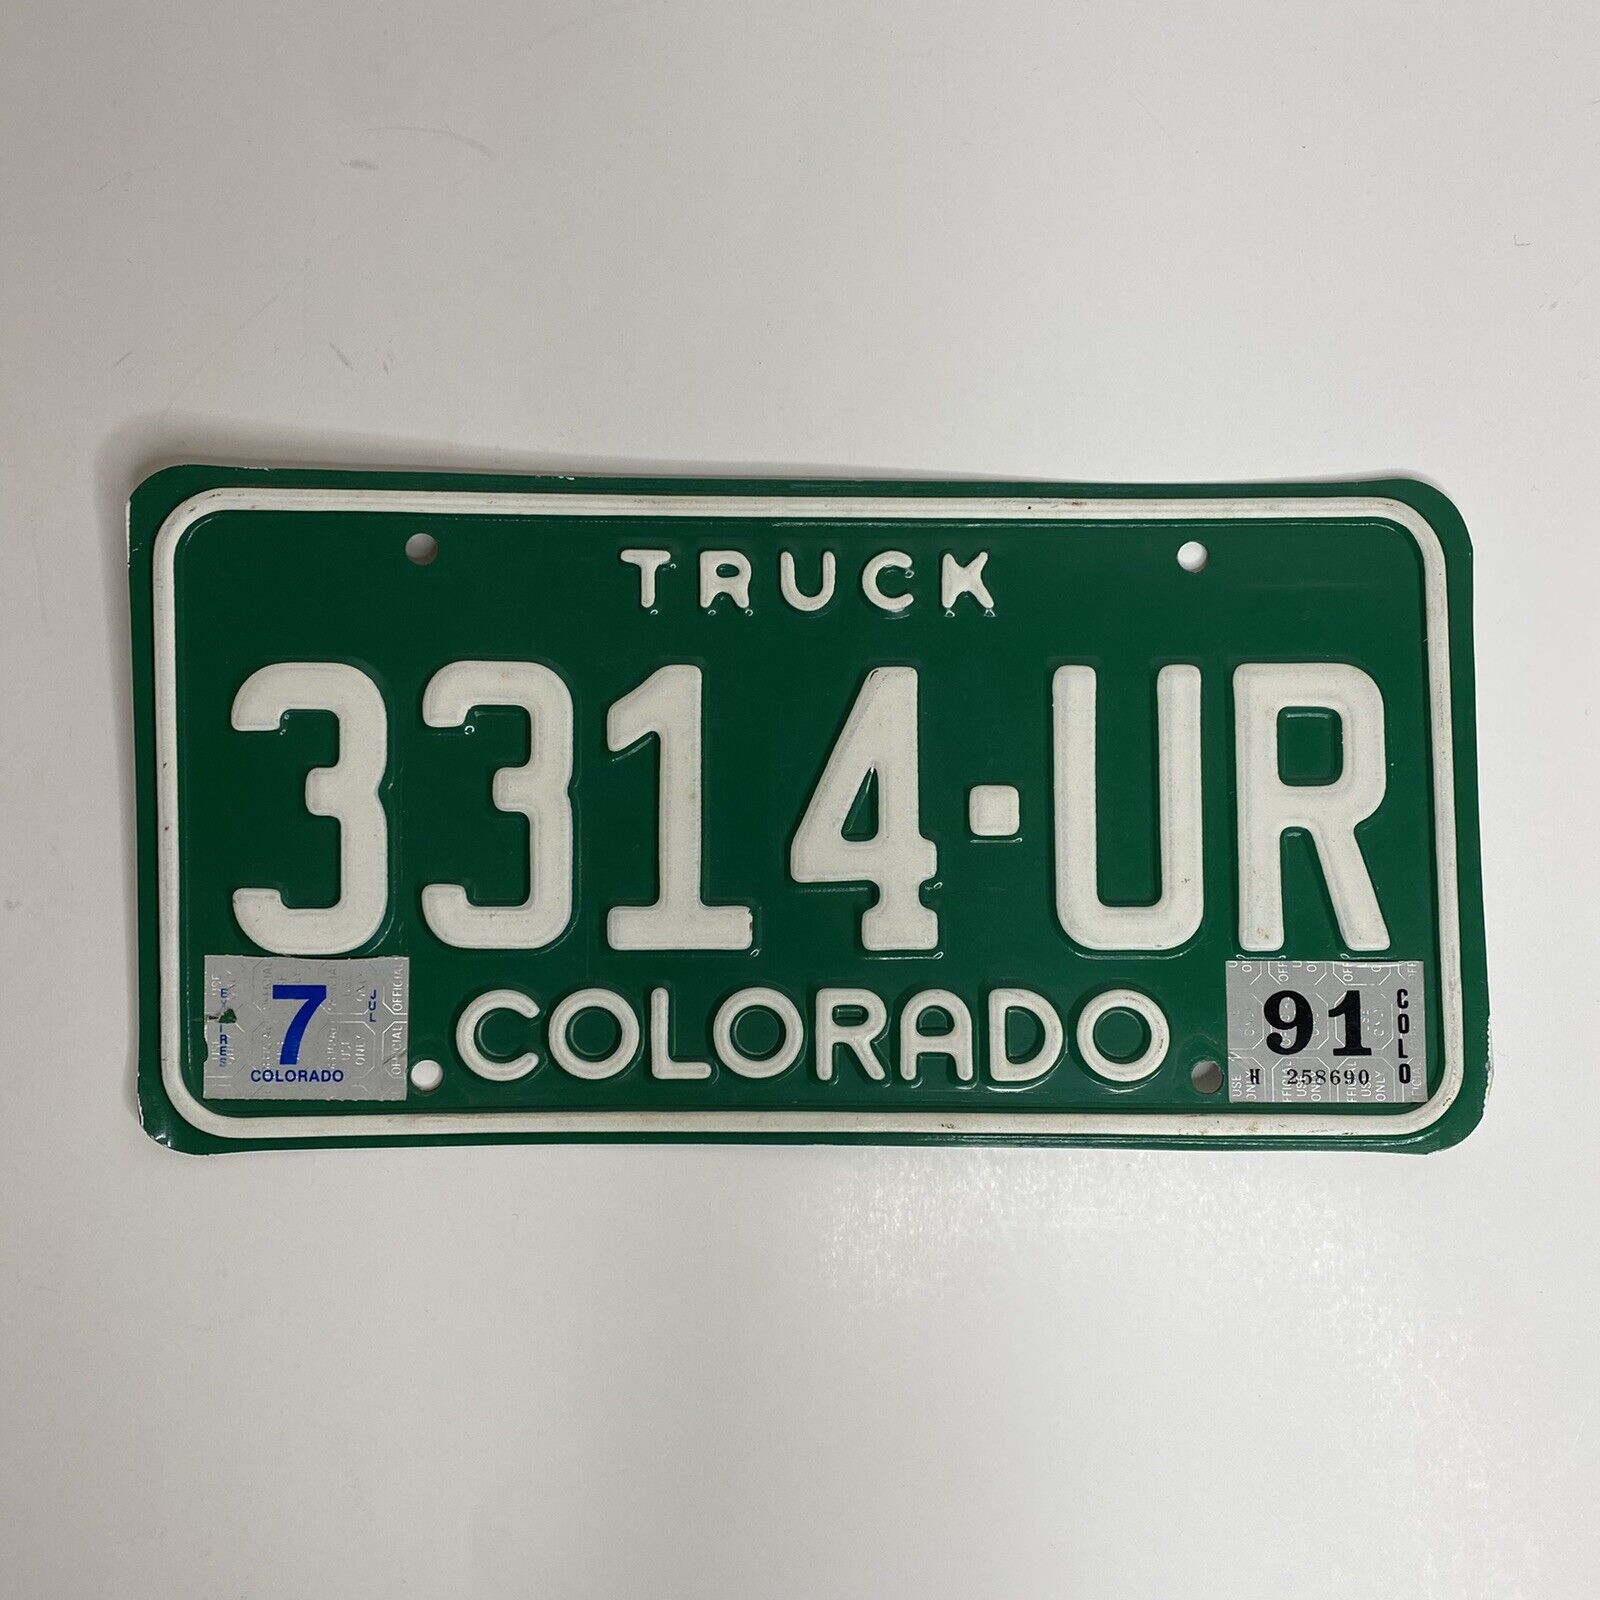 Vintage Colorado State License Plate “3314-ur” 1991 Sticker 91 Green Truck Plate